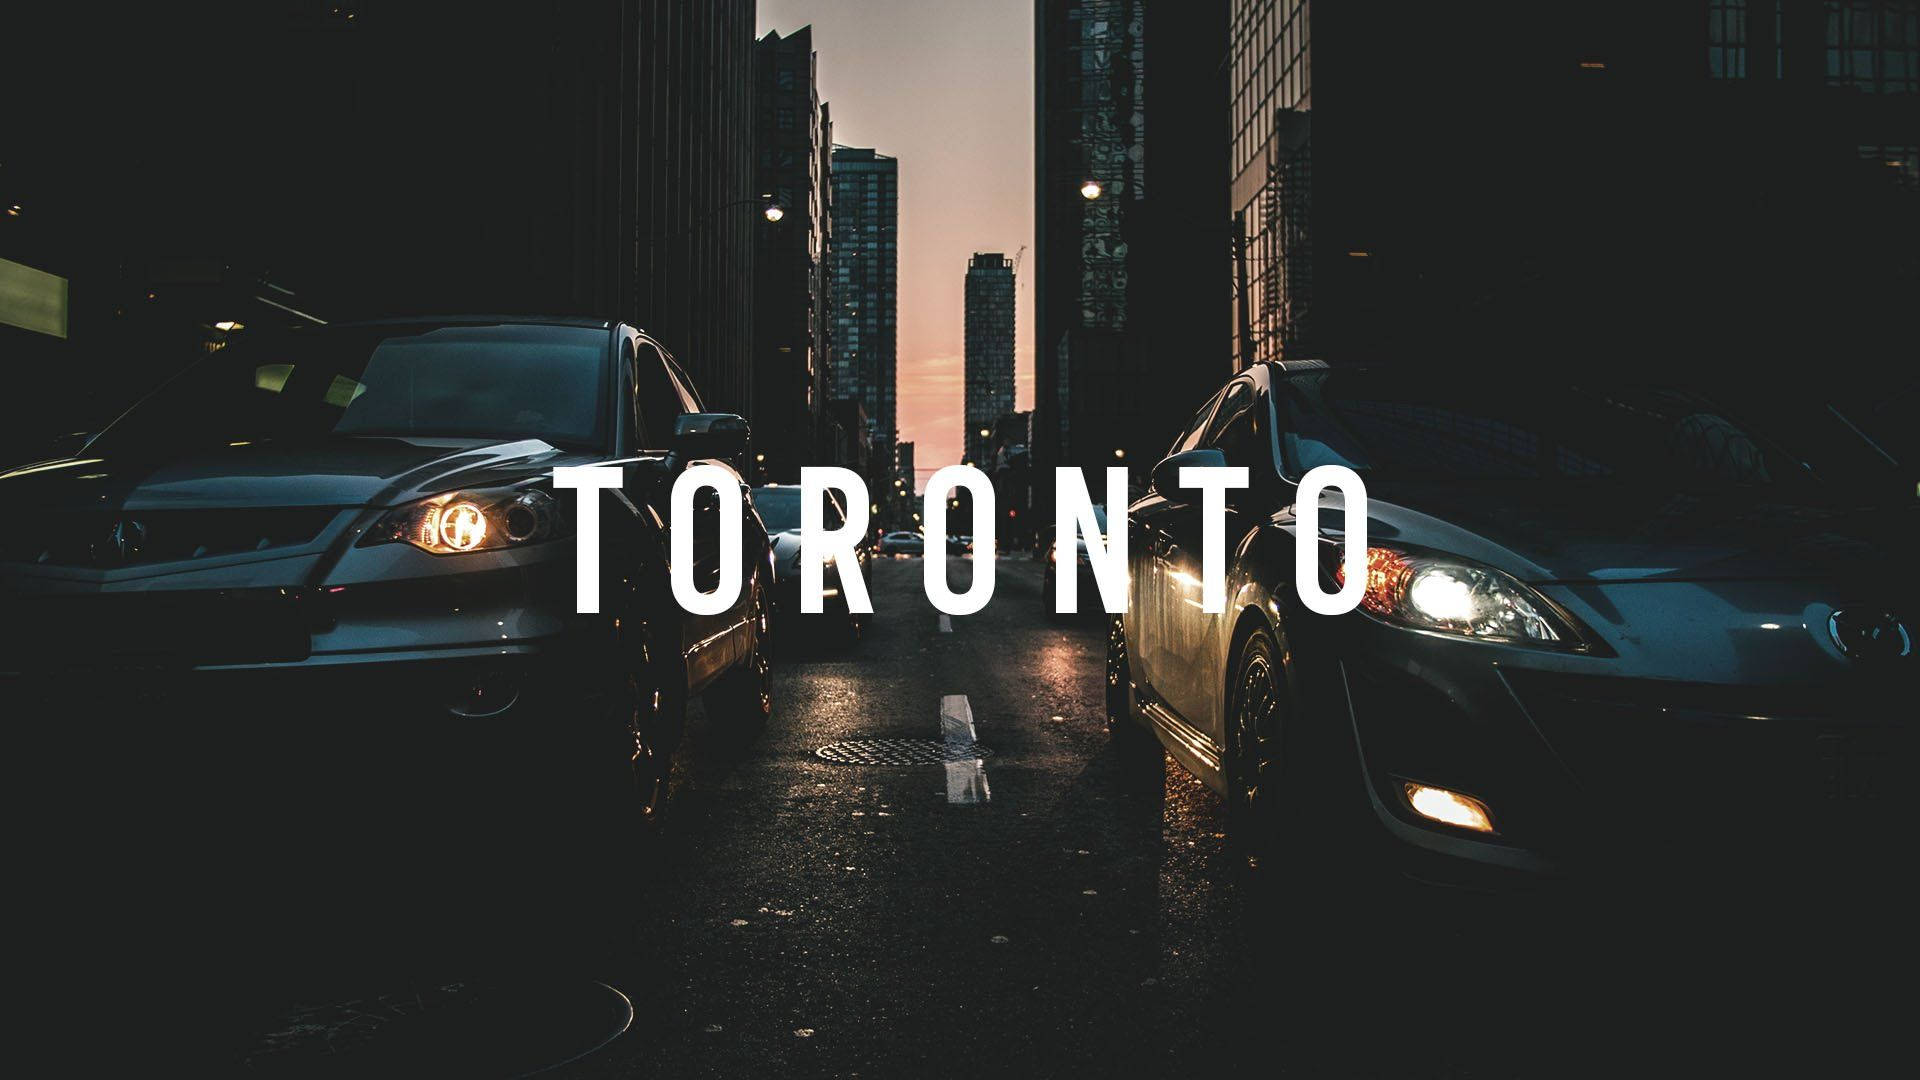 A Digital Poster Of Toronto